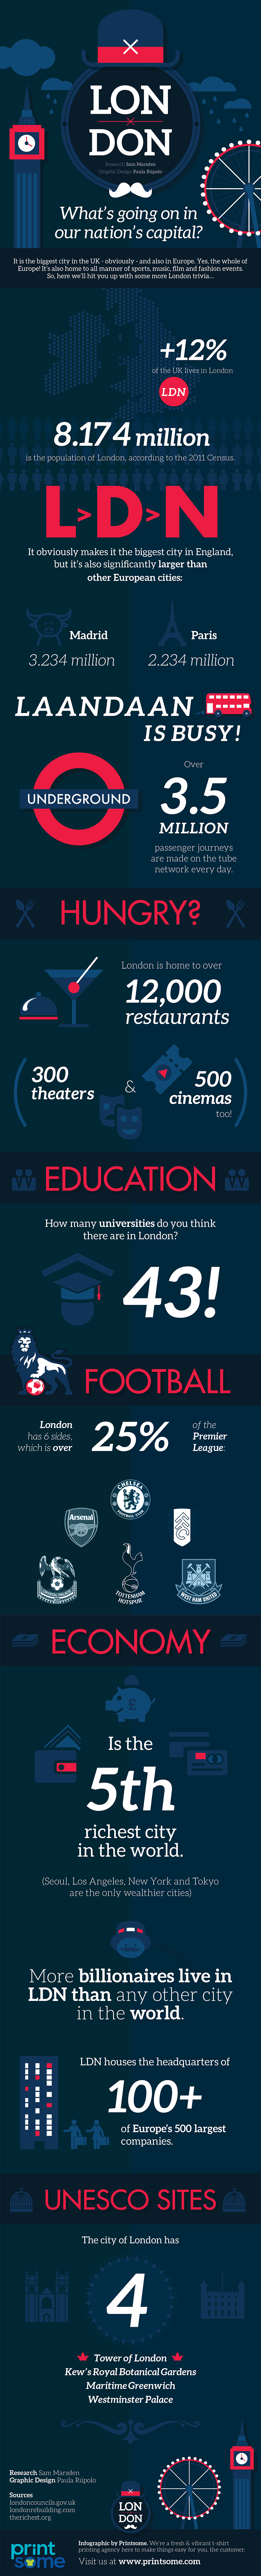 london-infographic.jpg